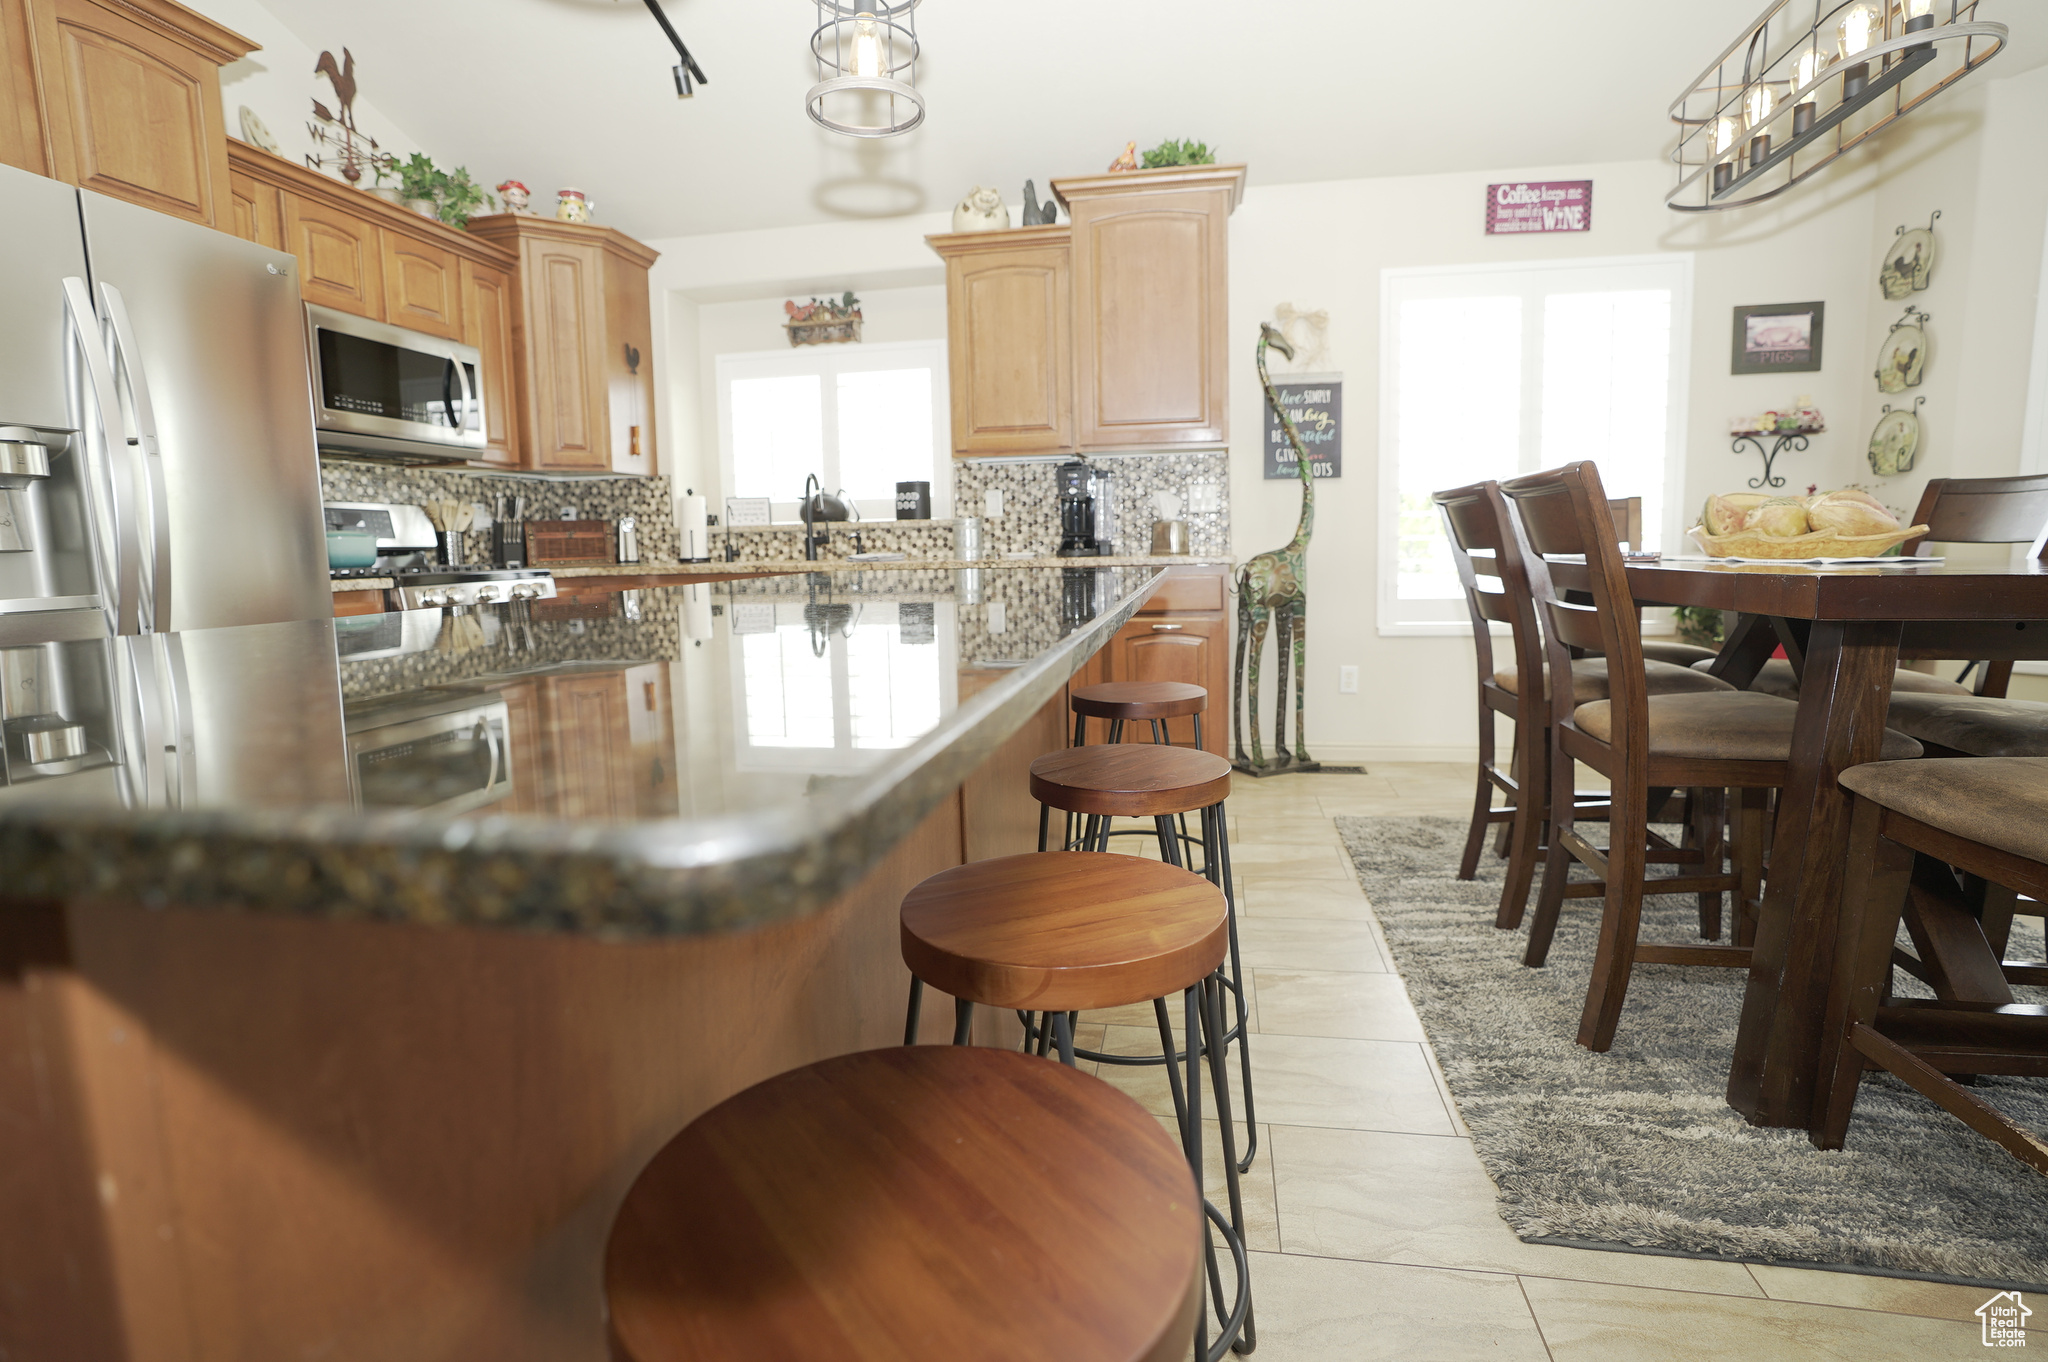 Kitchen featuring backsplash, stainless steel appliances, light tile floors, and a kitchen bar